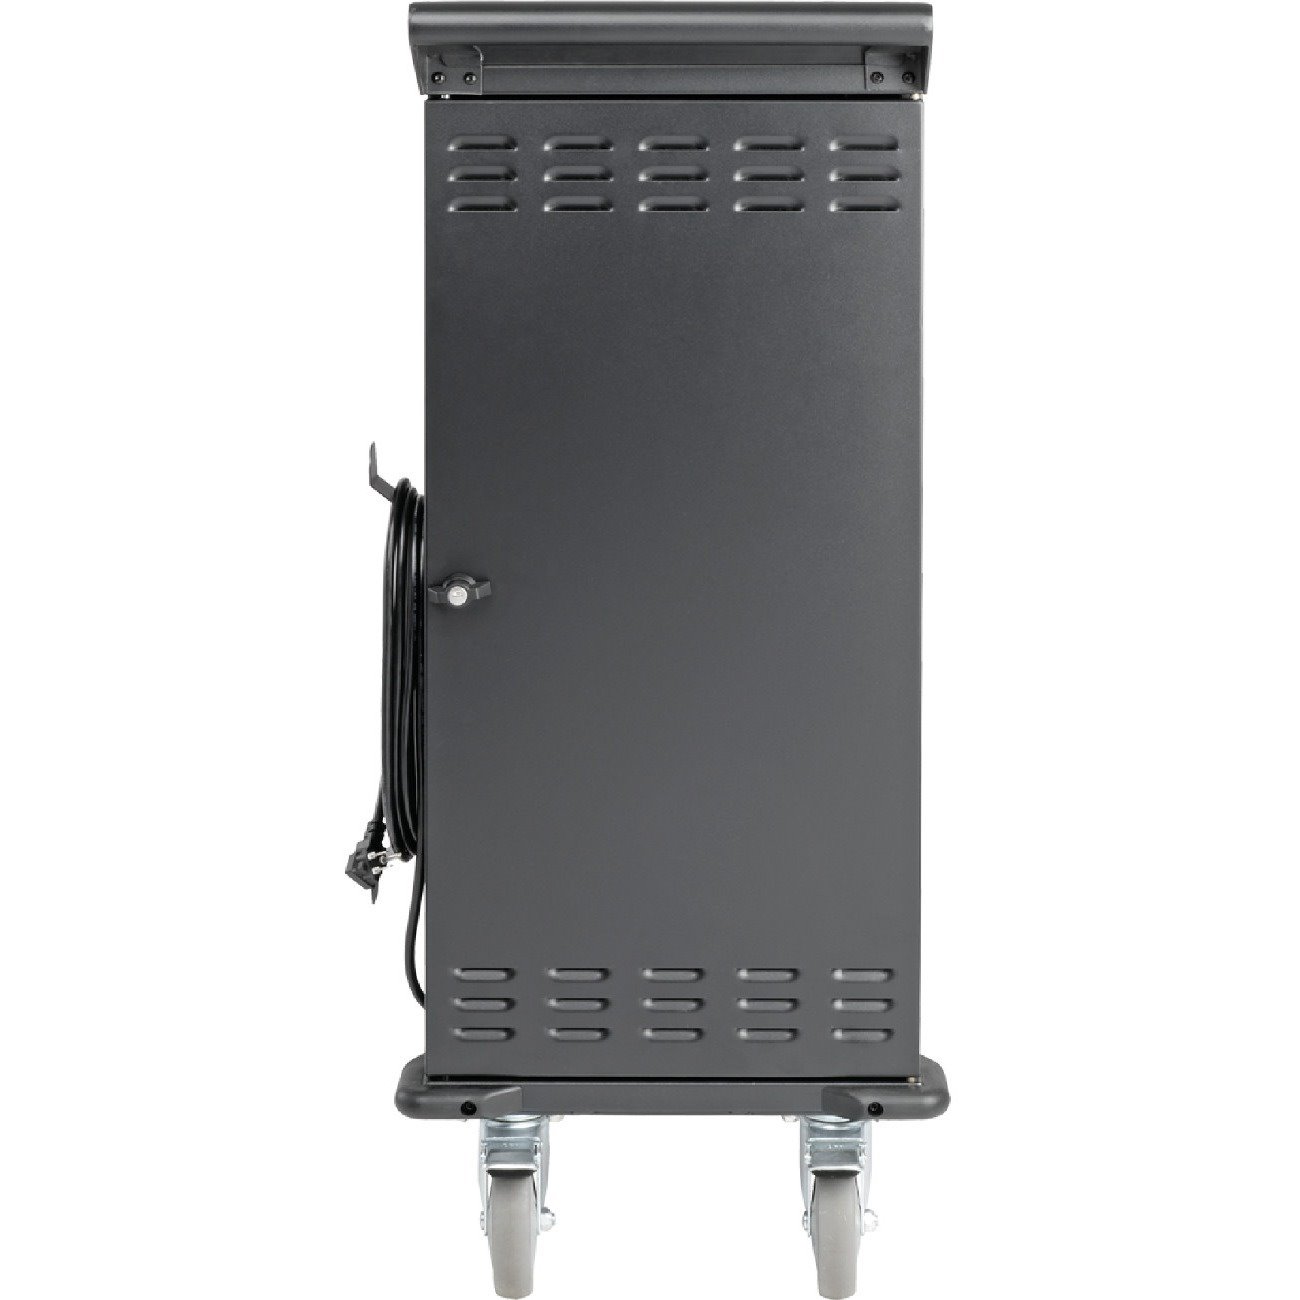 Tripp Lite by Eaton 27-Device AC Charging Cart for Laptops and Chromebooks - 120V, NEMA 5-15P, 10 ft. (3.05 m) Cord, Black